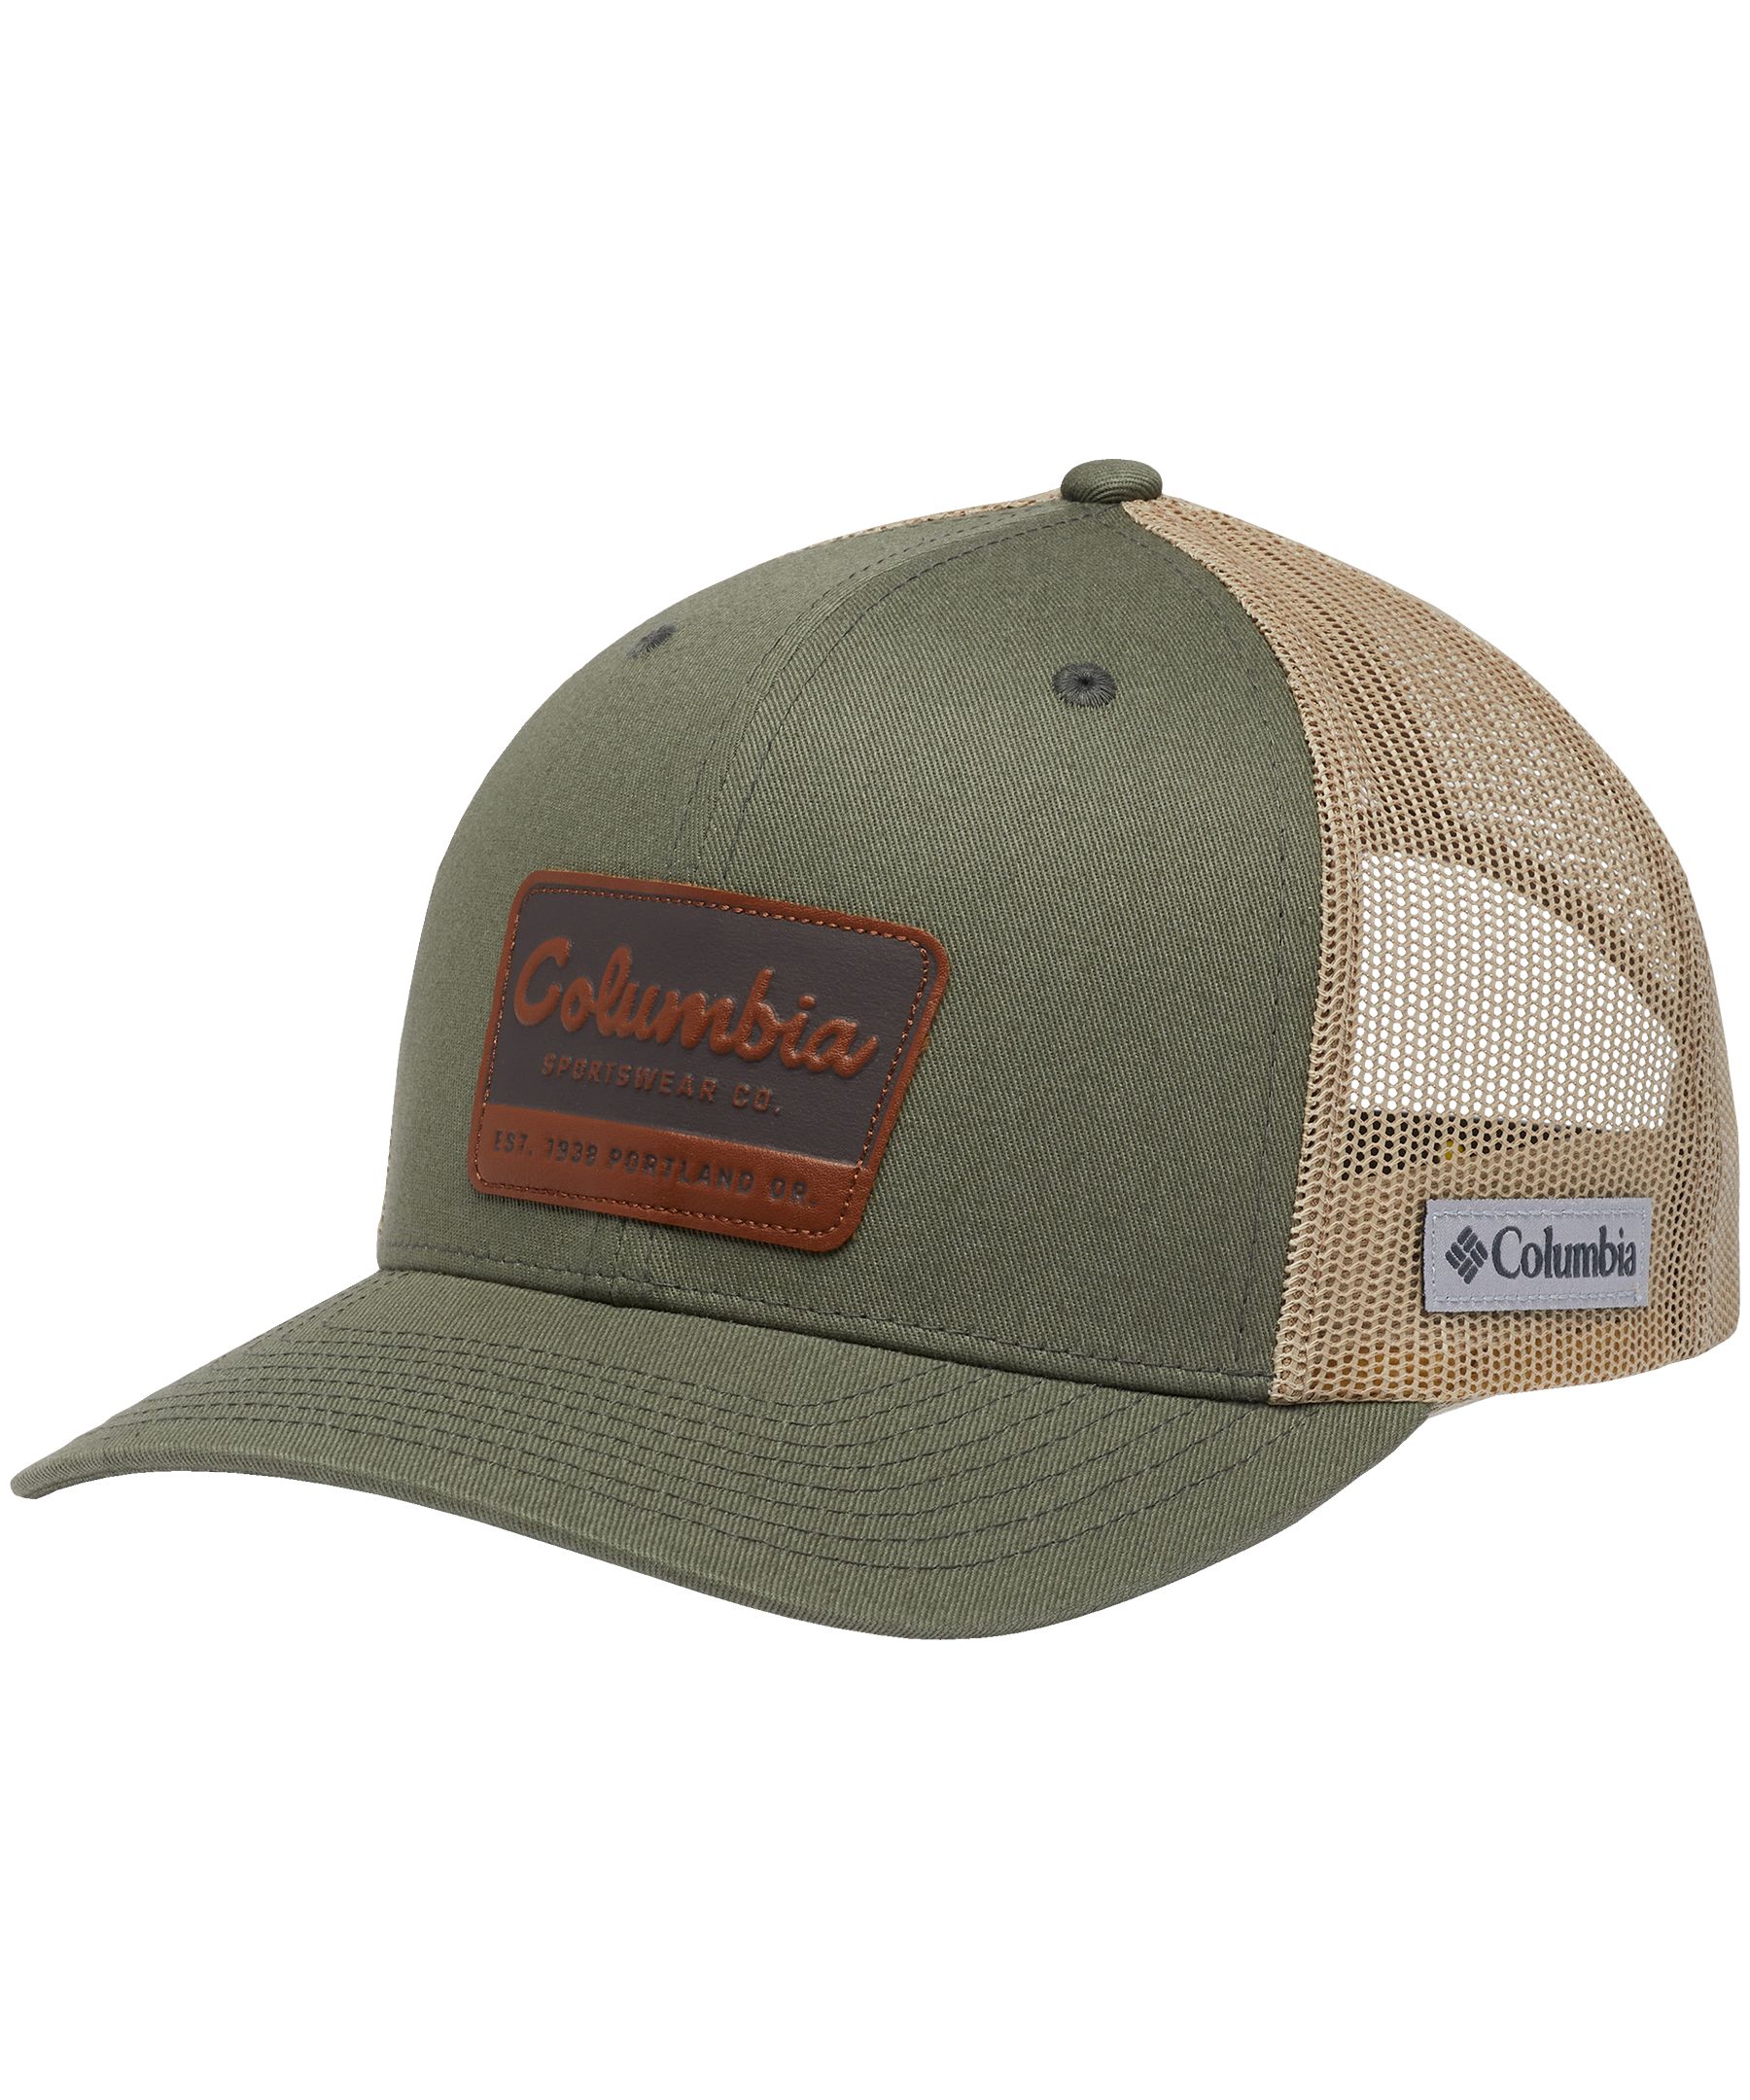 Columbia Men's Rugged Outdoor Snap Back Trucker Hat